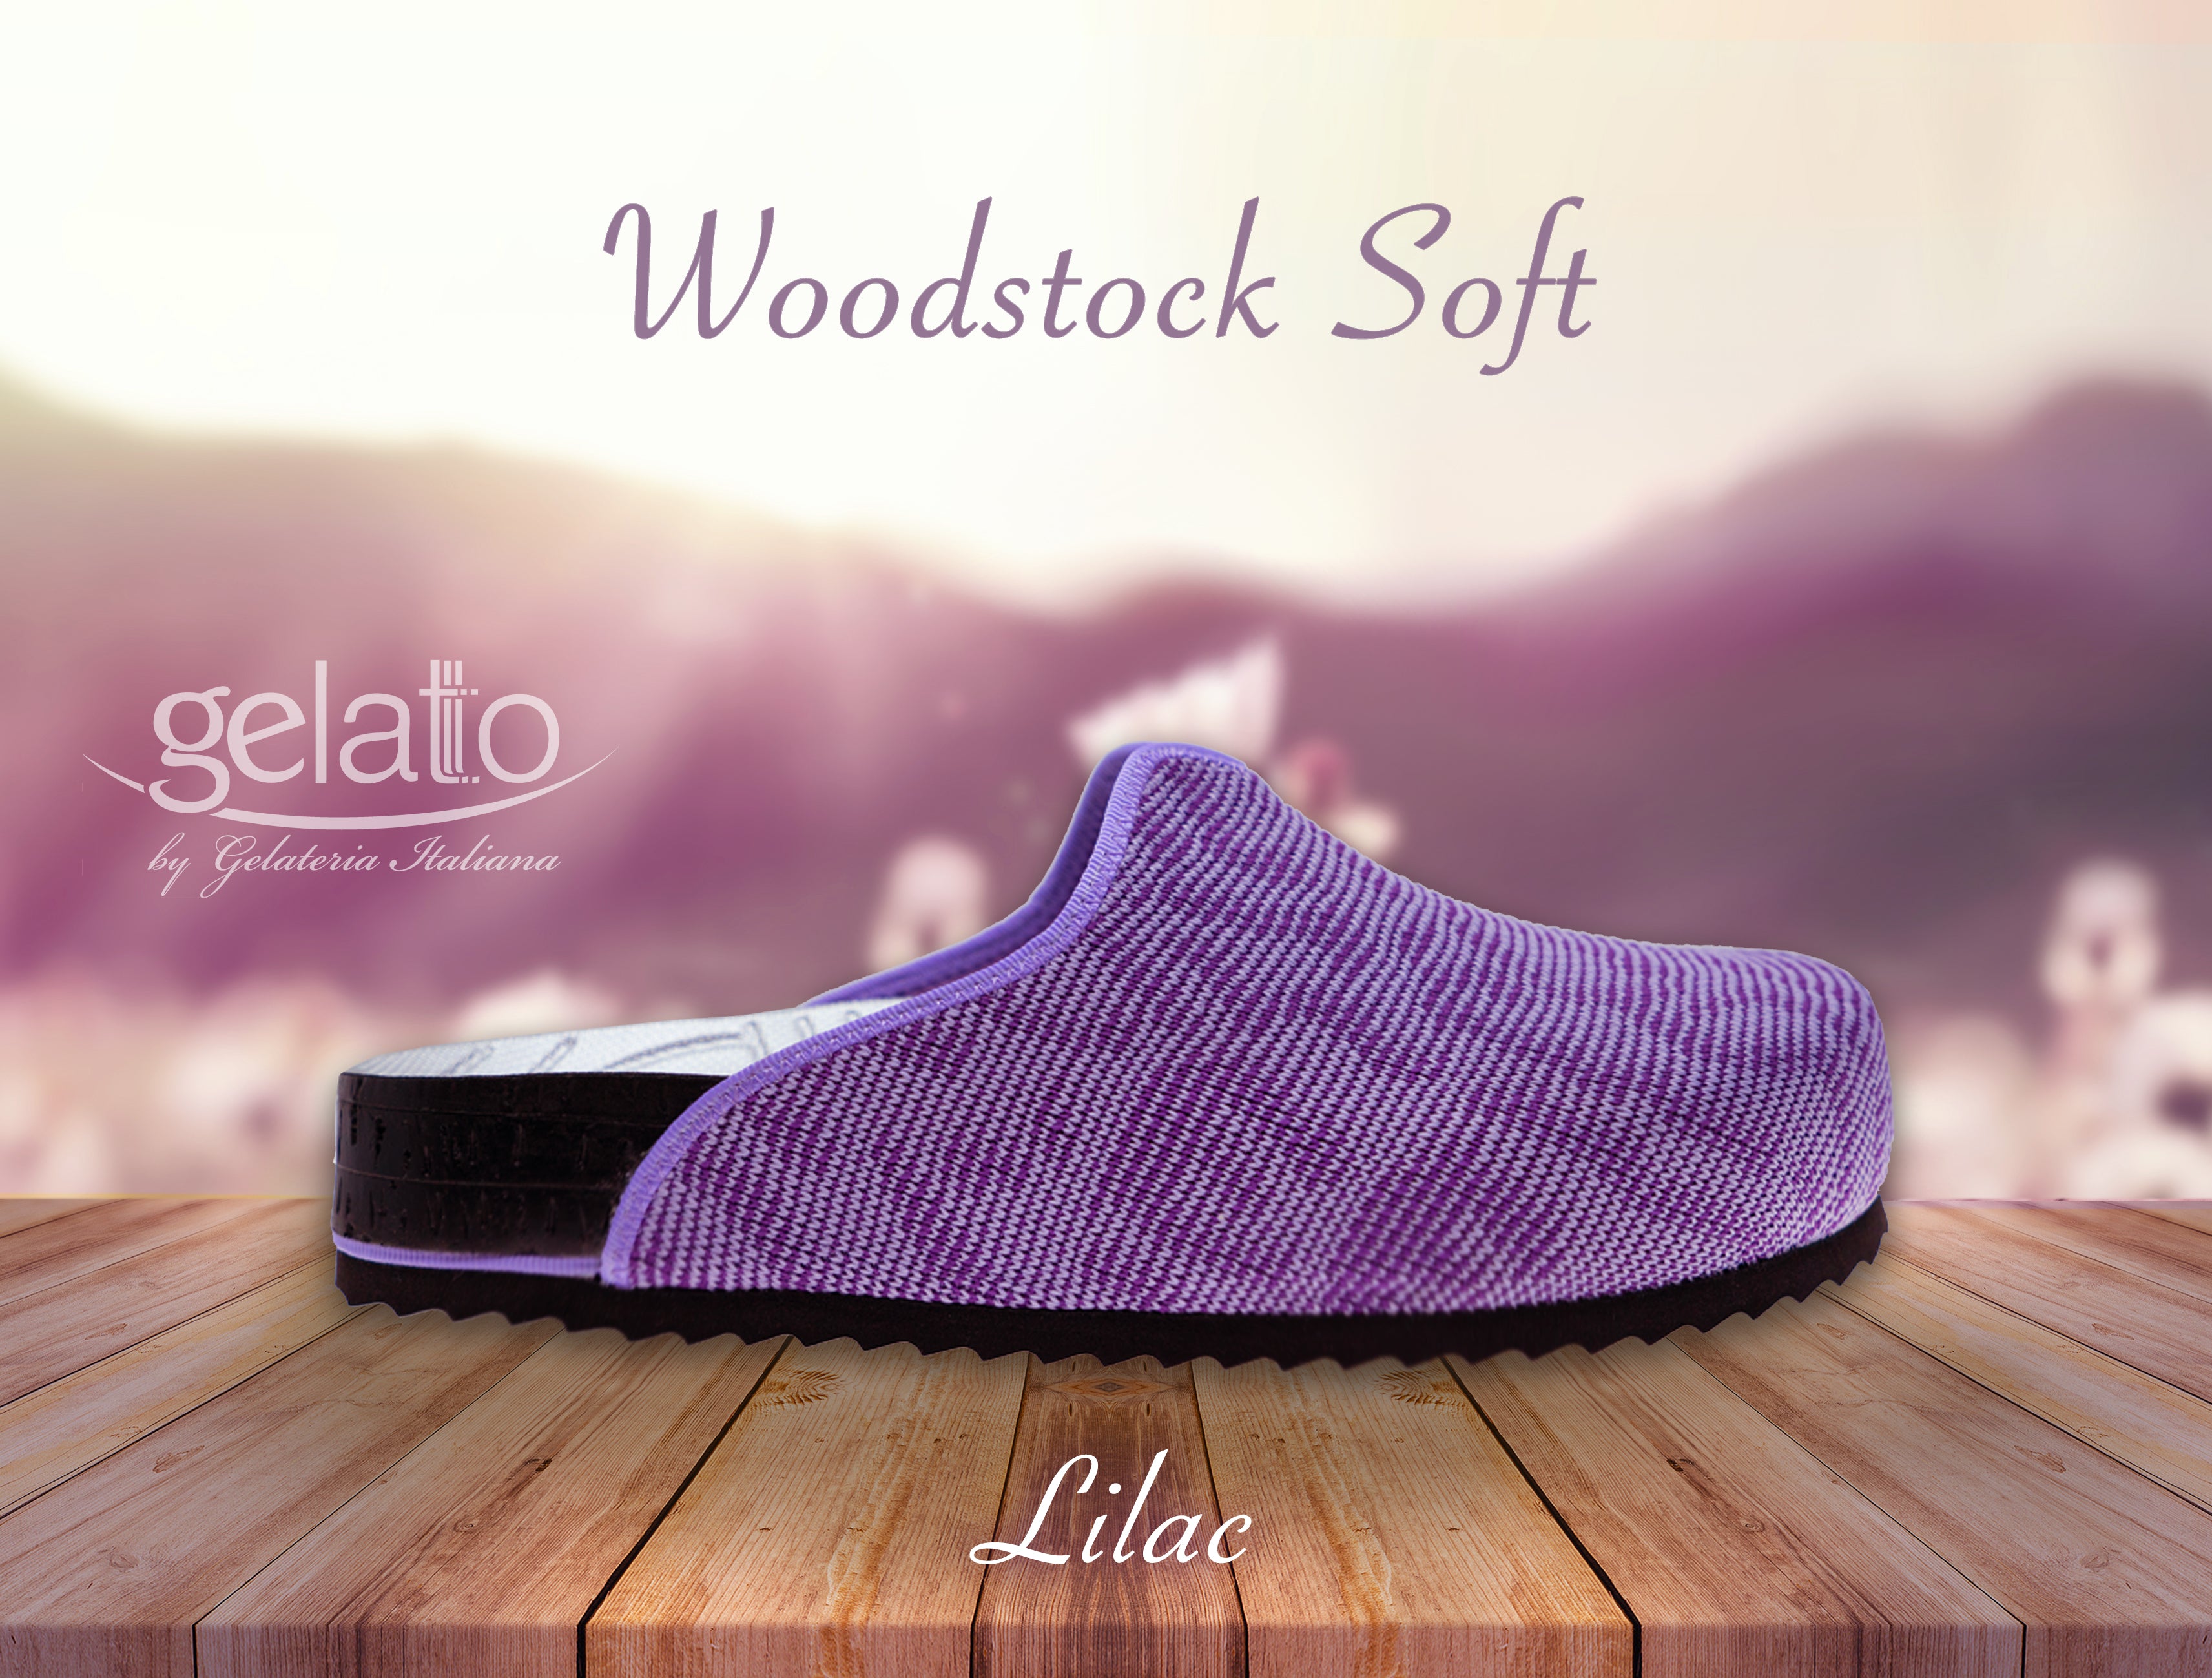 Woodstock Soft 淺紫 Lilac